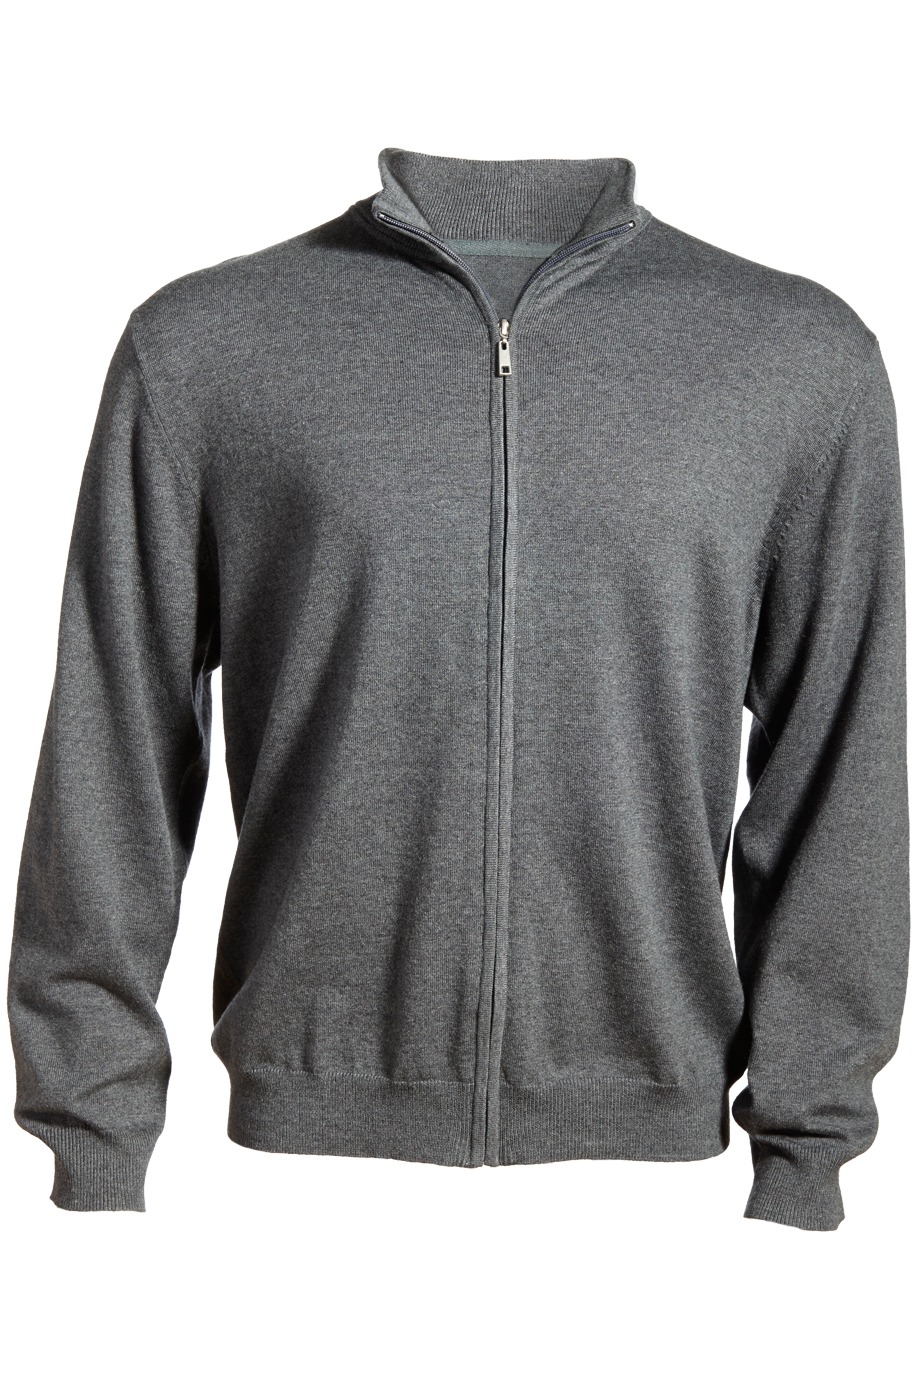 Edwards Garment 4073 - Full Zip Sweater